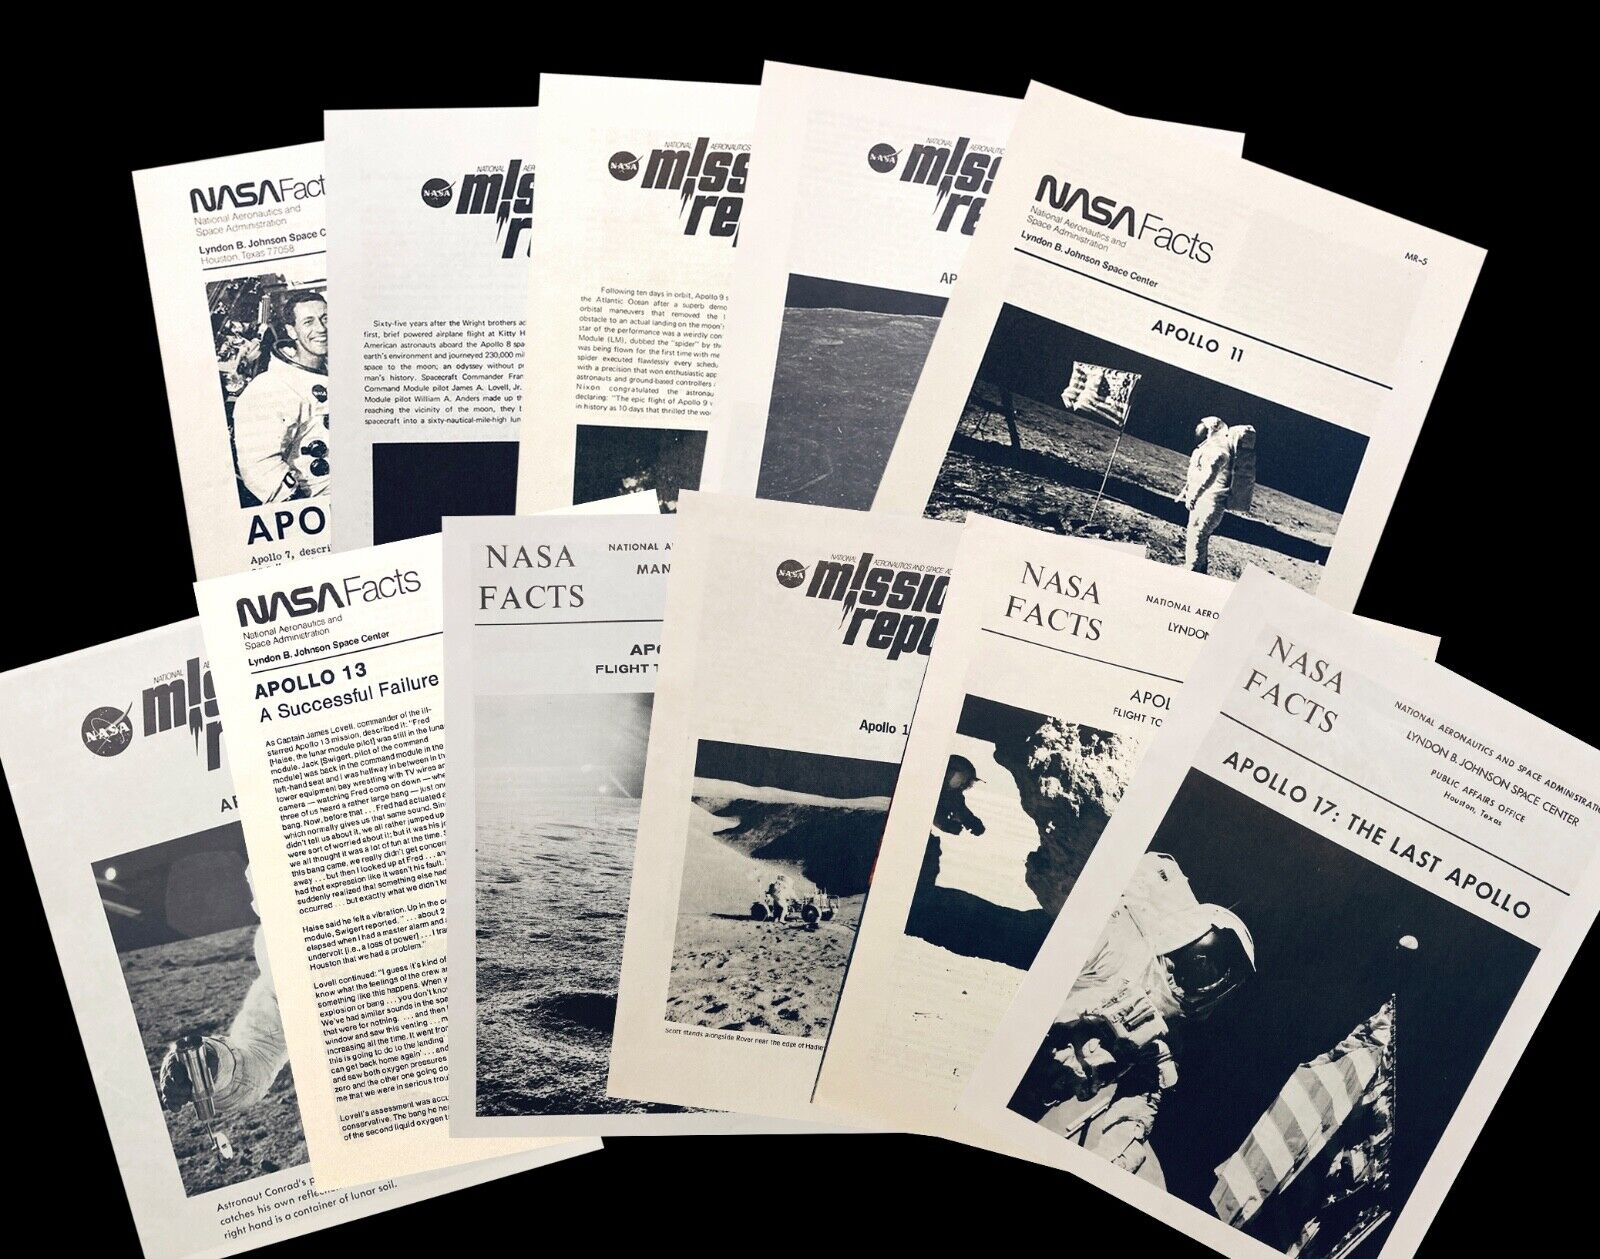 NASA Apollo Mission Reports & NASA Facts, Missions #7 thru #17, a complete set.